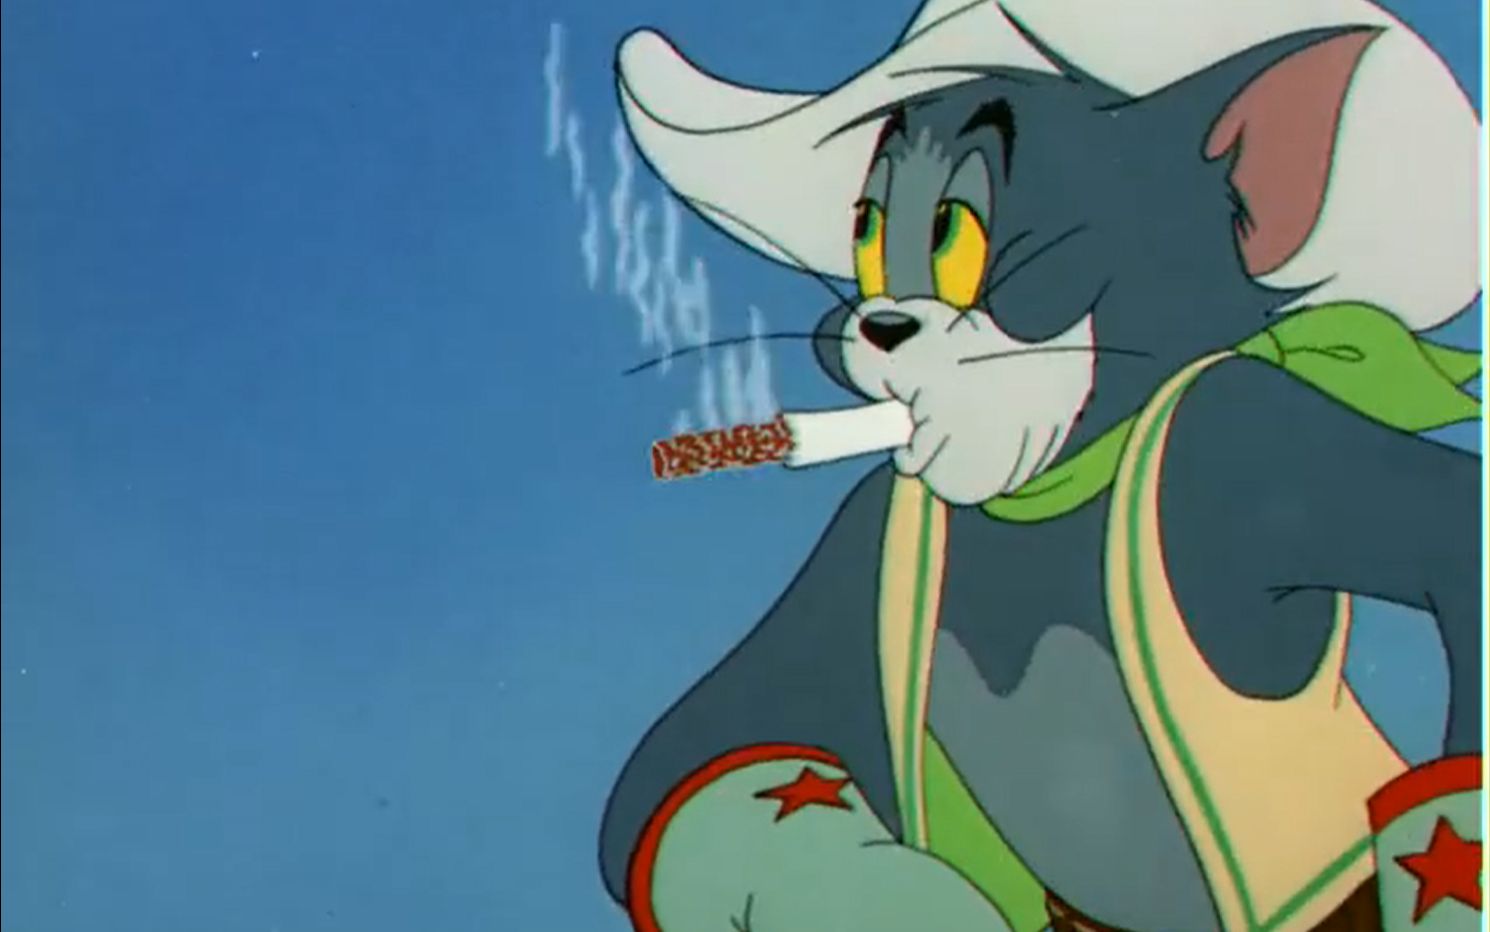 tom猫抽烟图片